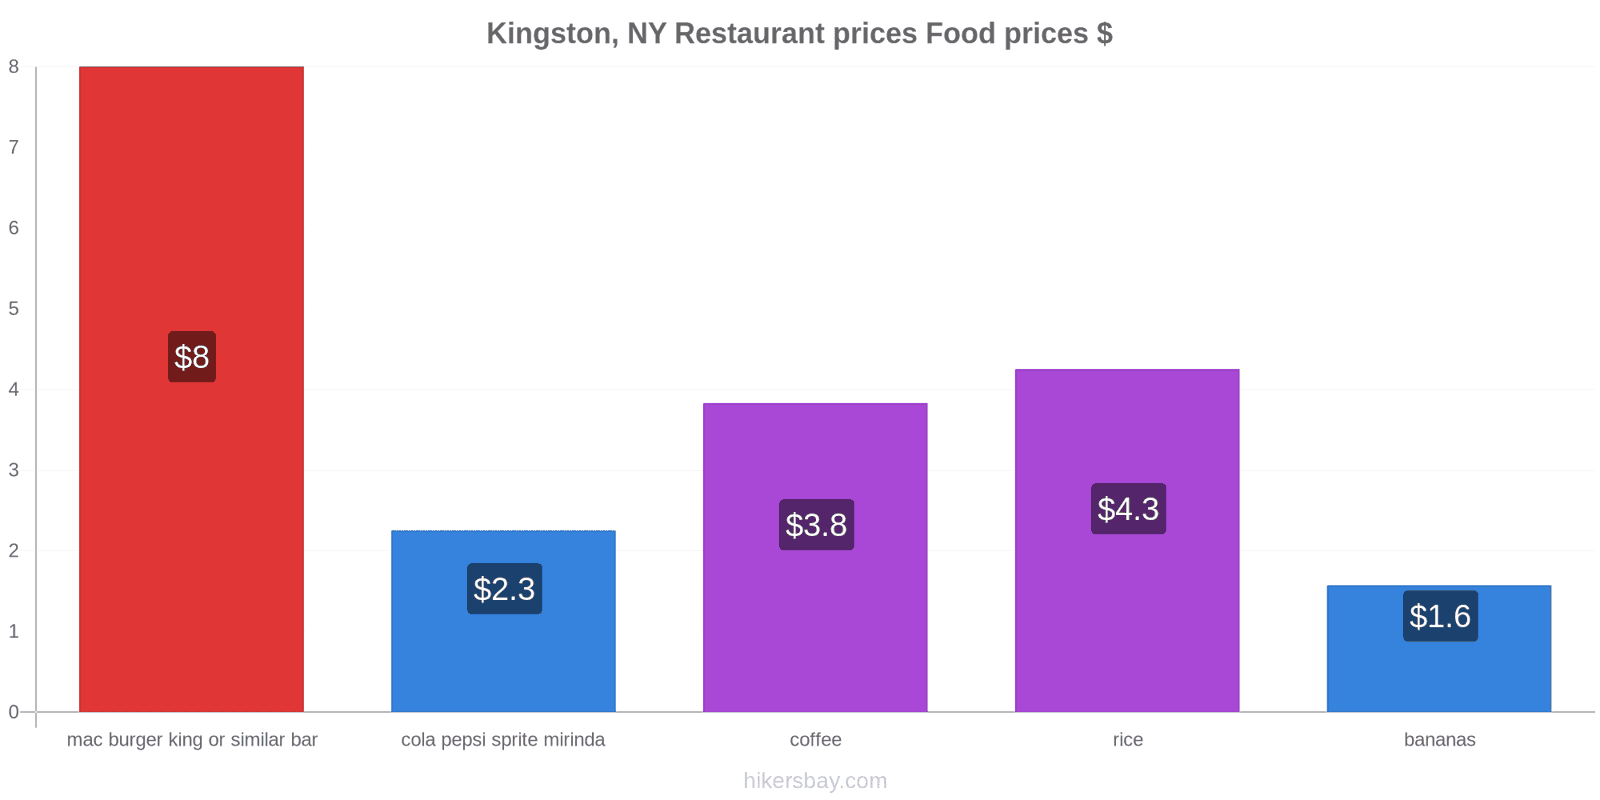 Kingston, NY price changes hikersbay.com